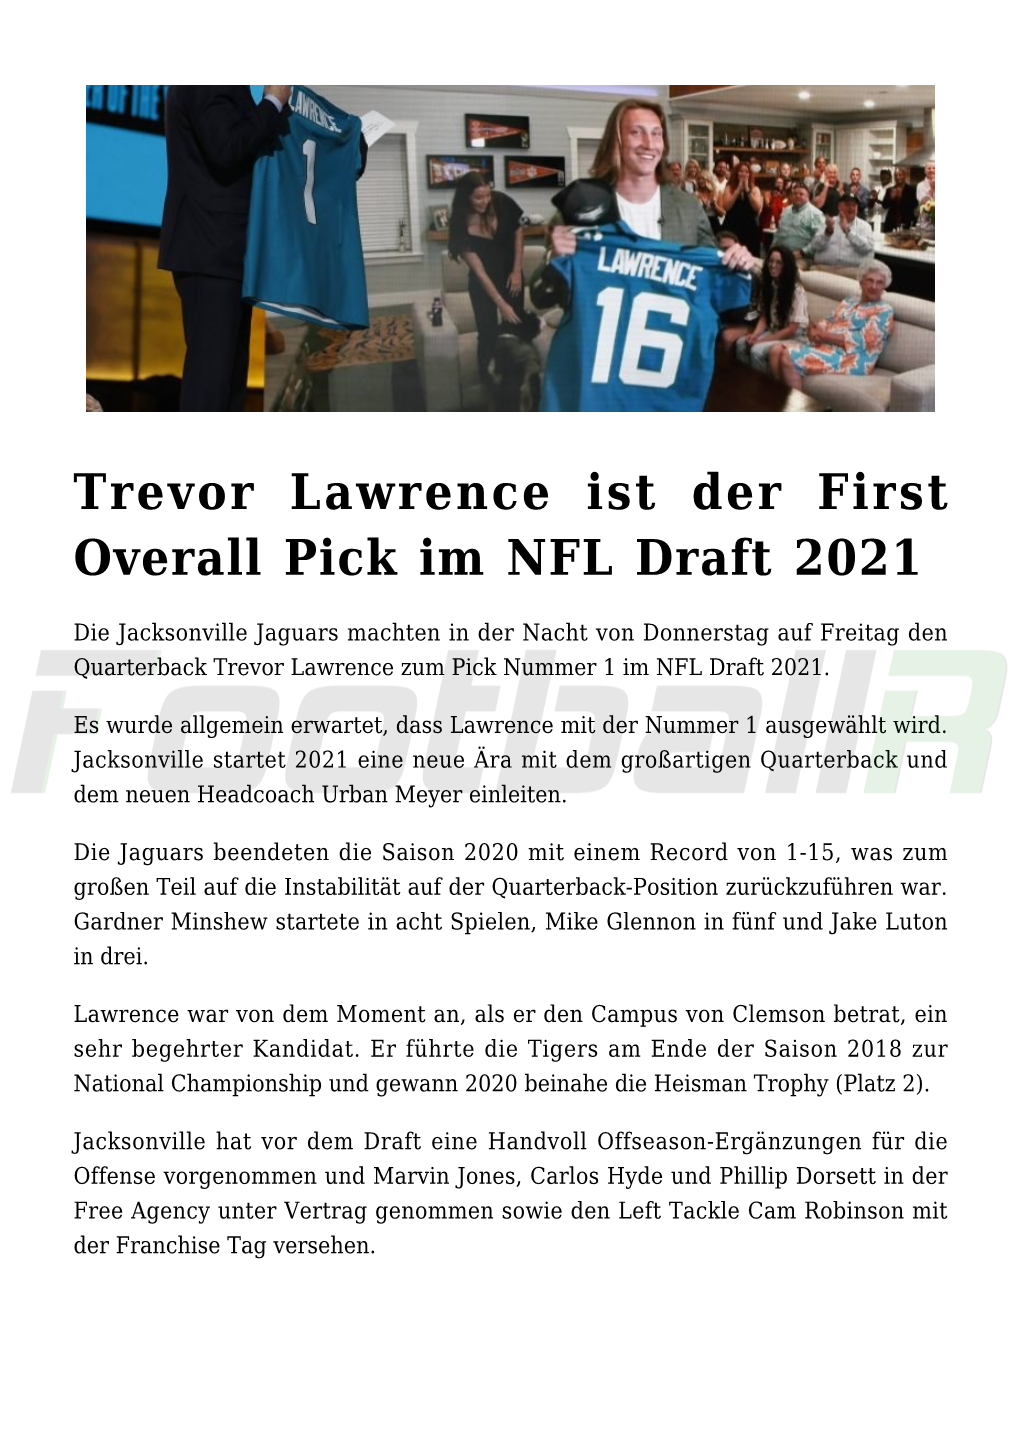 Trevor Lawrence Ist Der First Overall Pick Im NFL Draft 2021